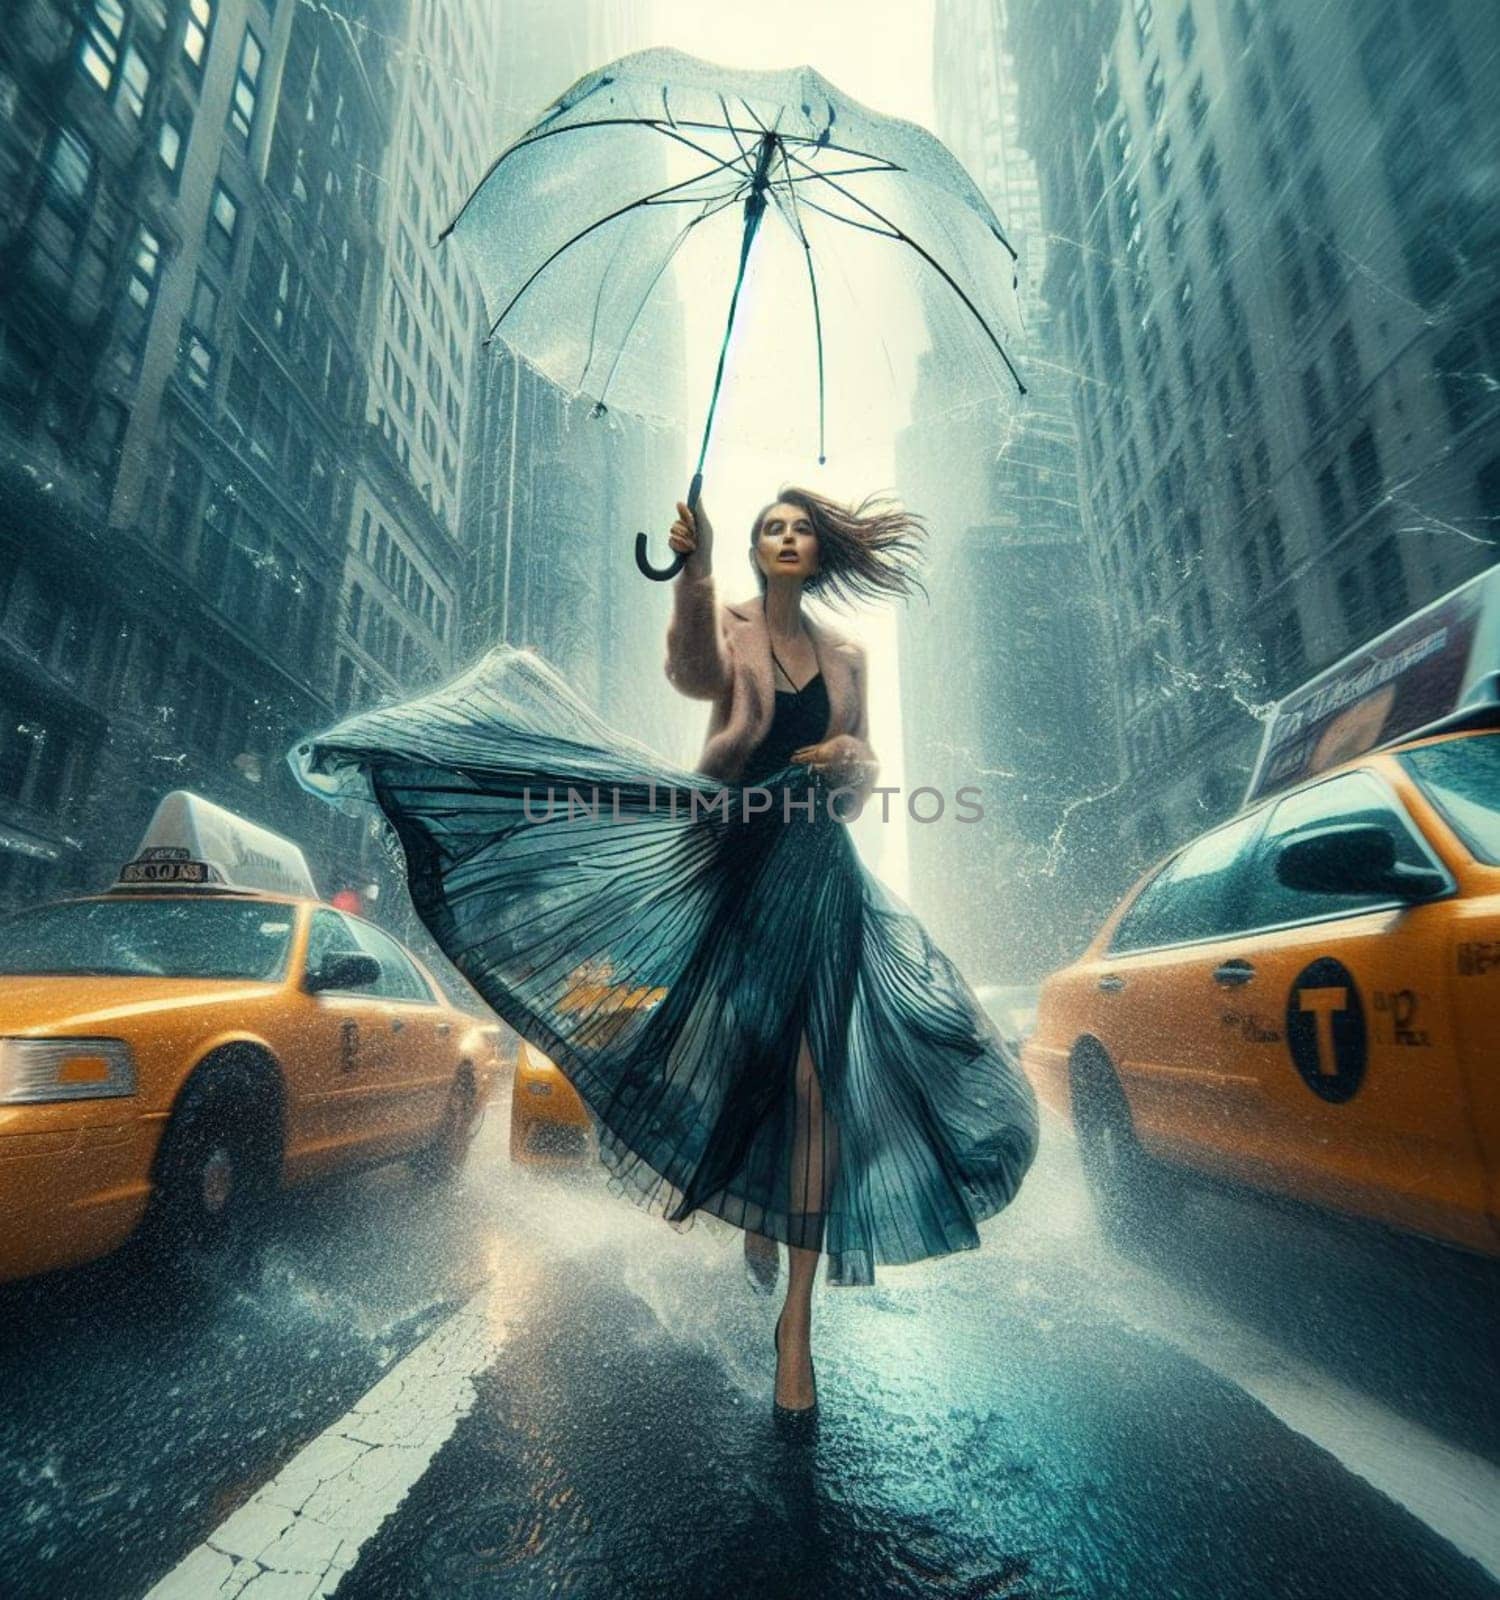 voluptous woman umbrella joyful under the rain New York City among traffic crossing street painting by verbano